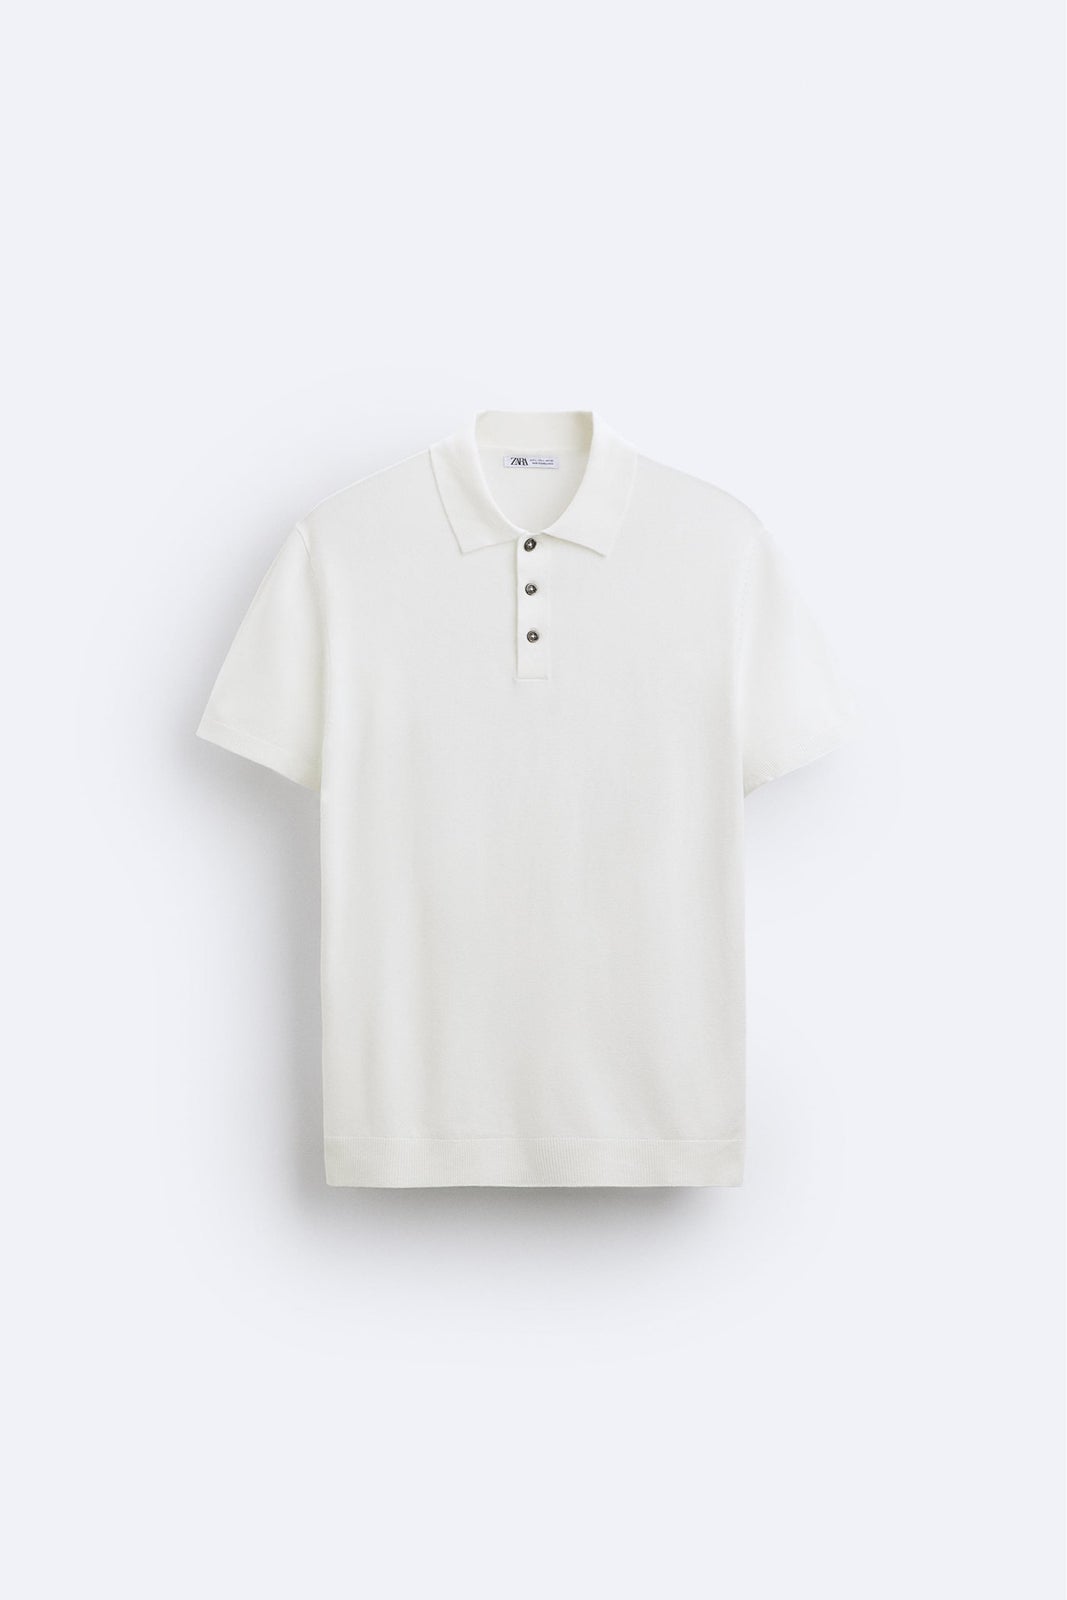 Polo t-shirt, Zara, str. M